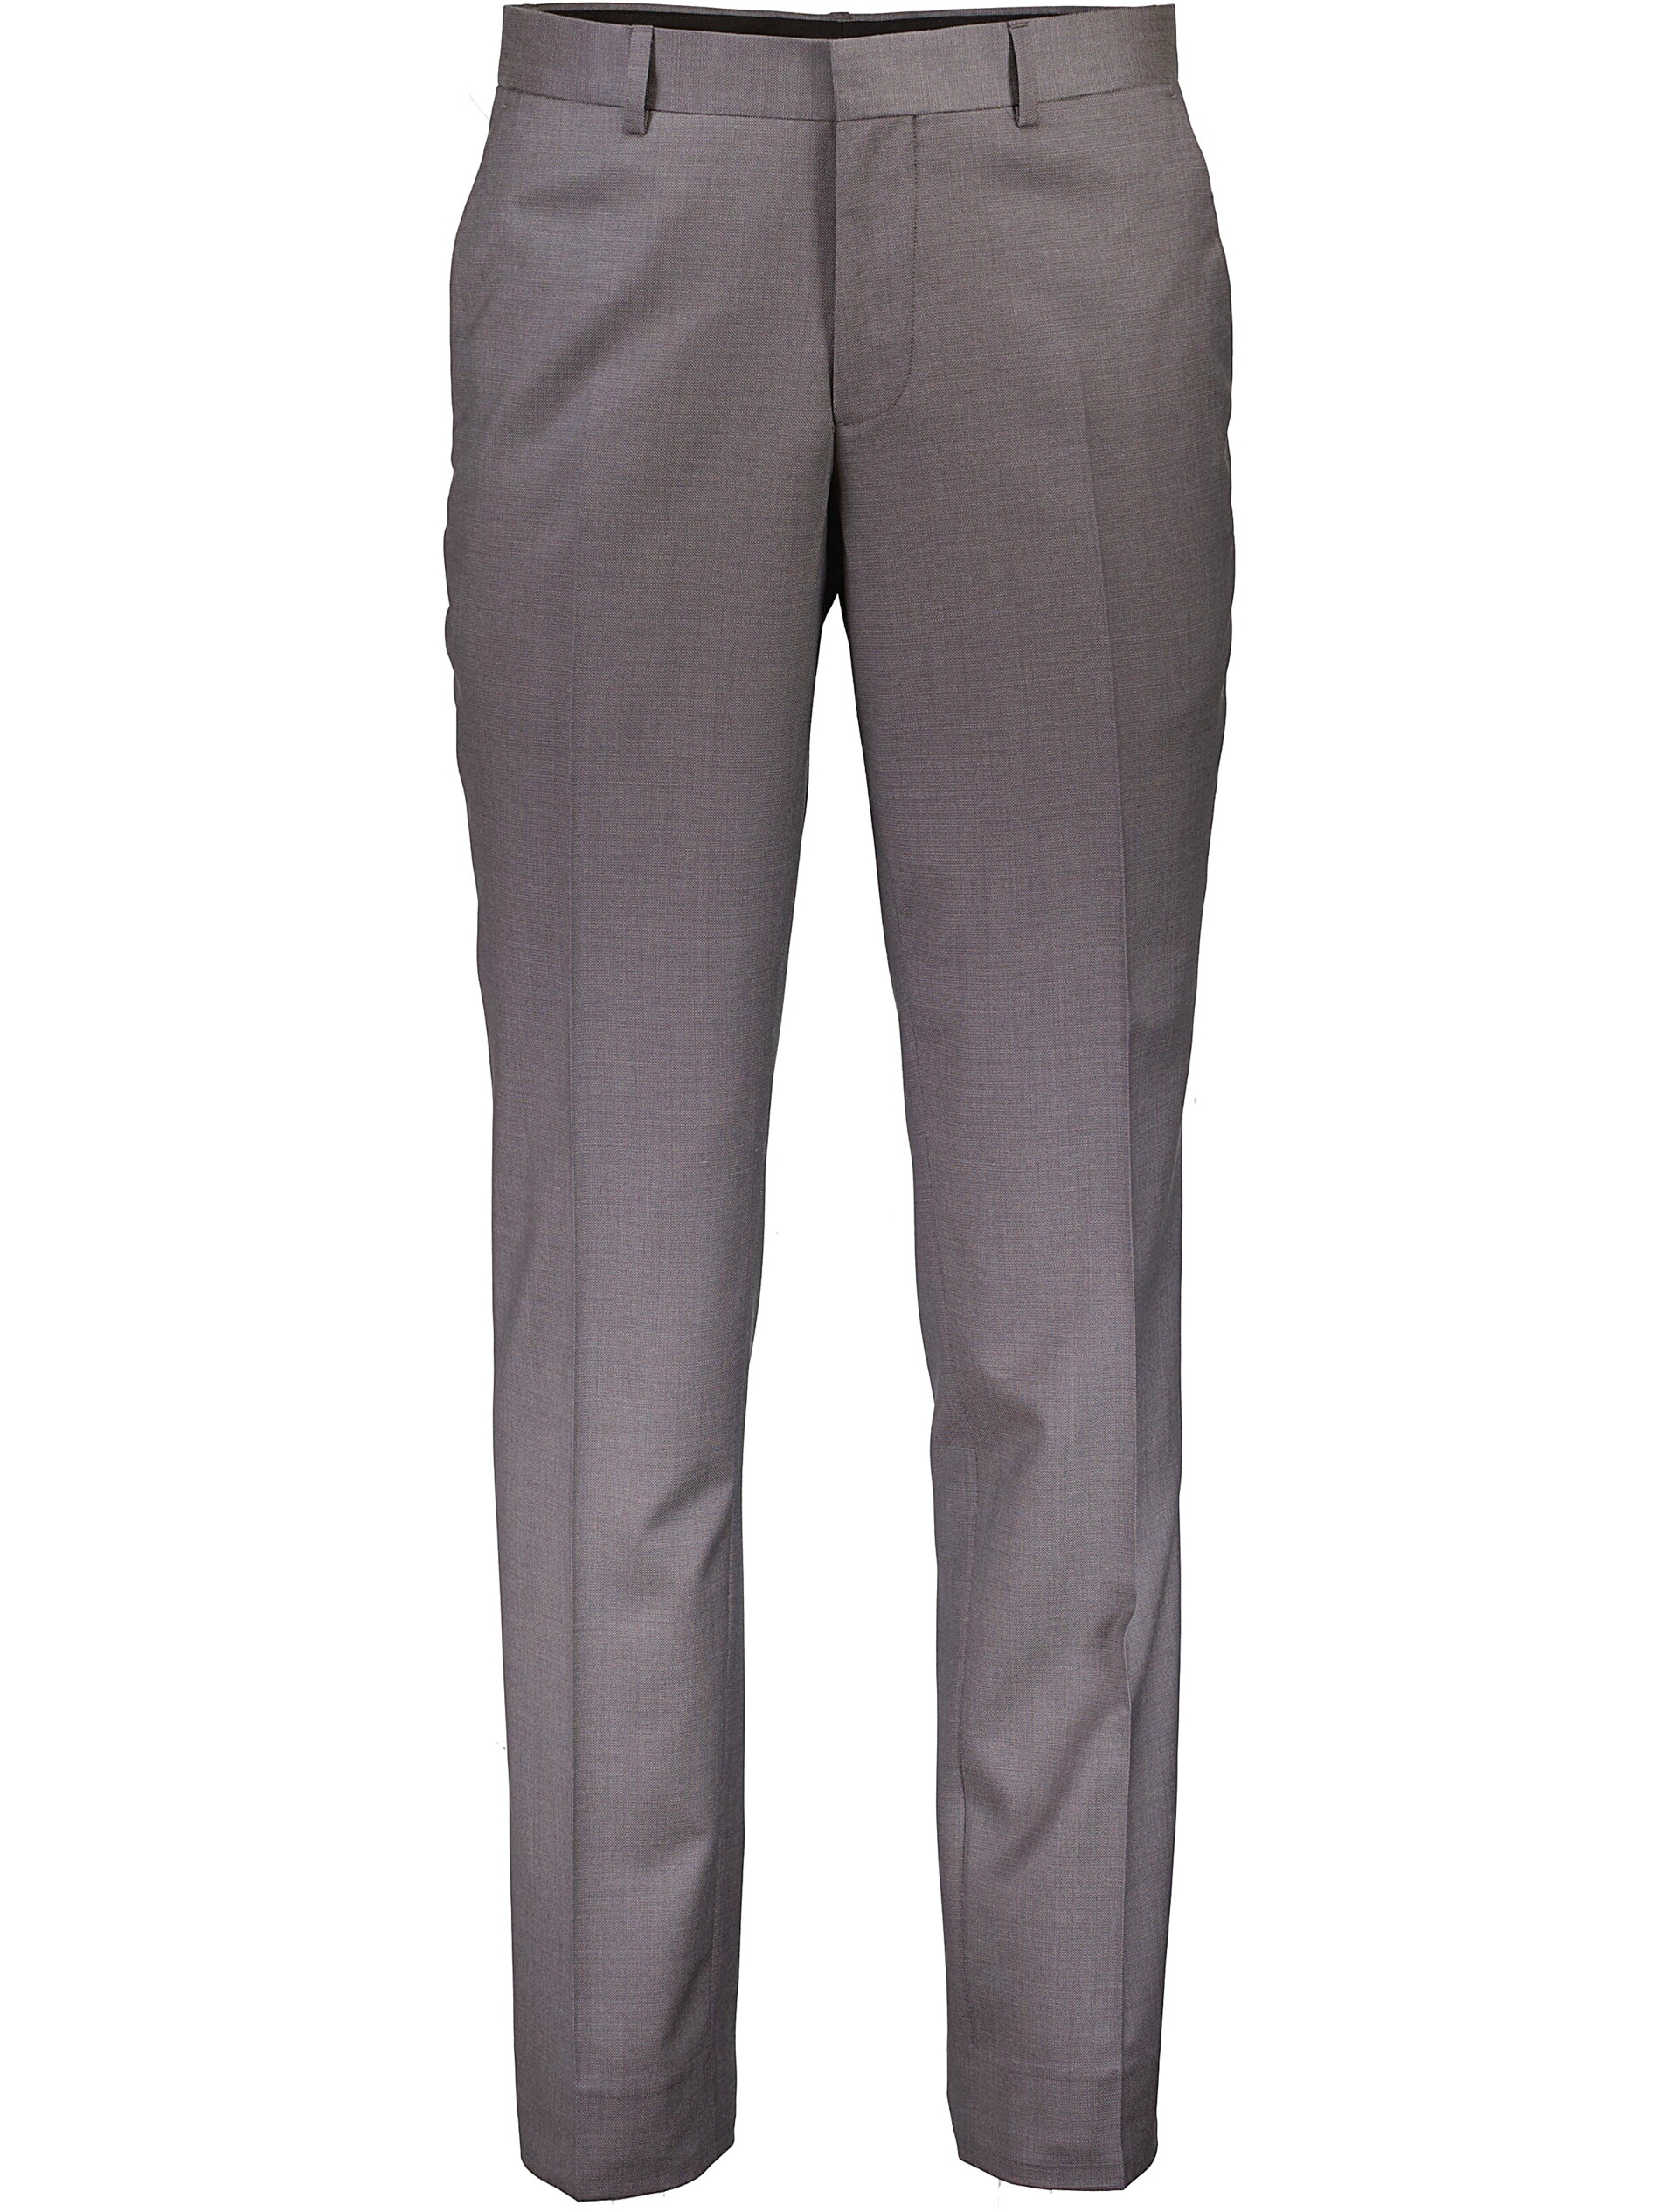 Lindbergh Suit pants grey / grey